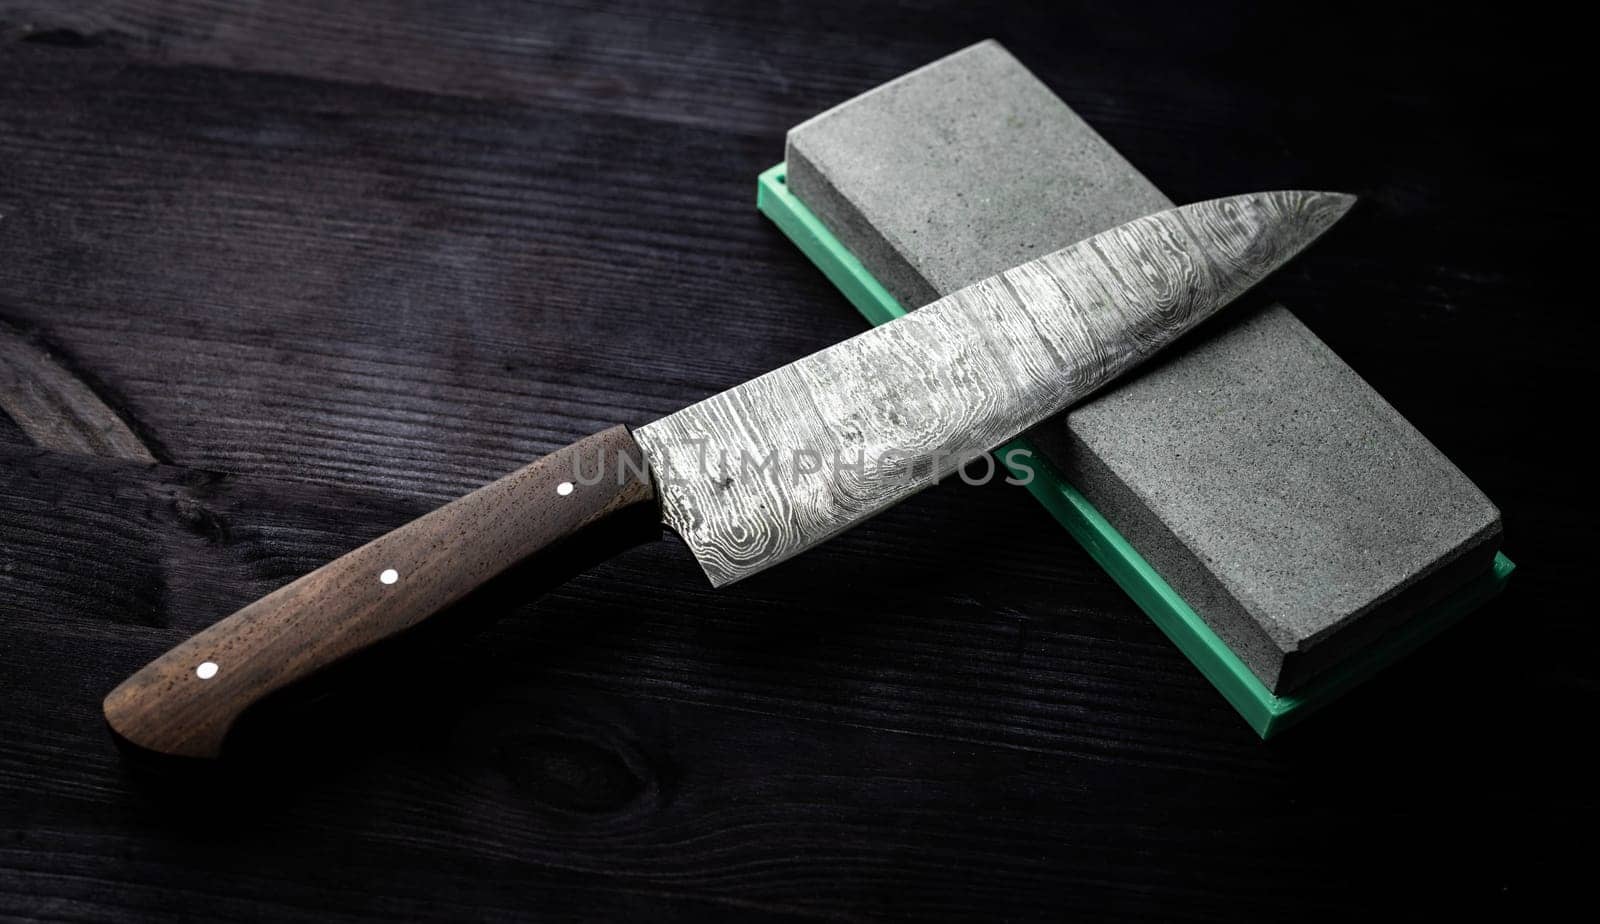 Sharp Chef's Kitchen Knife And Sharpening Stone Lie On Dark Table